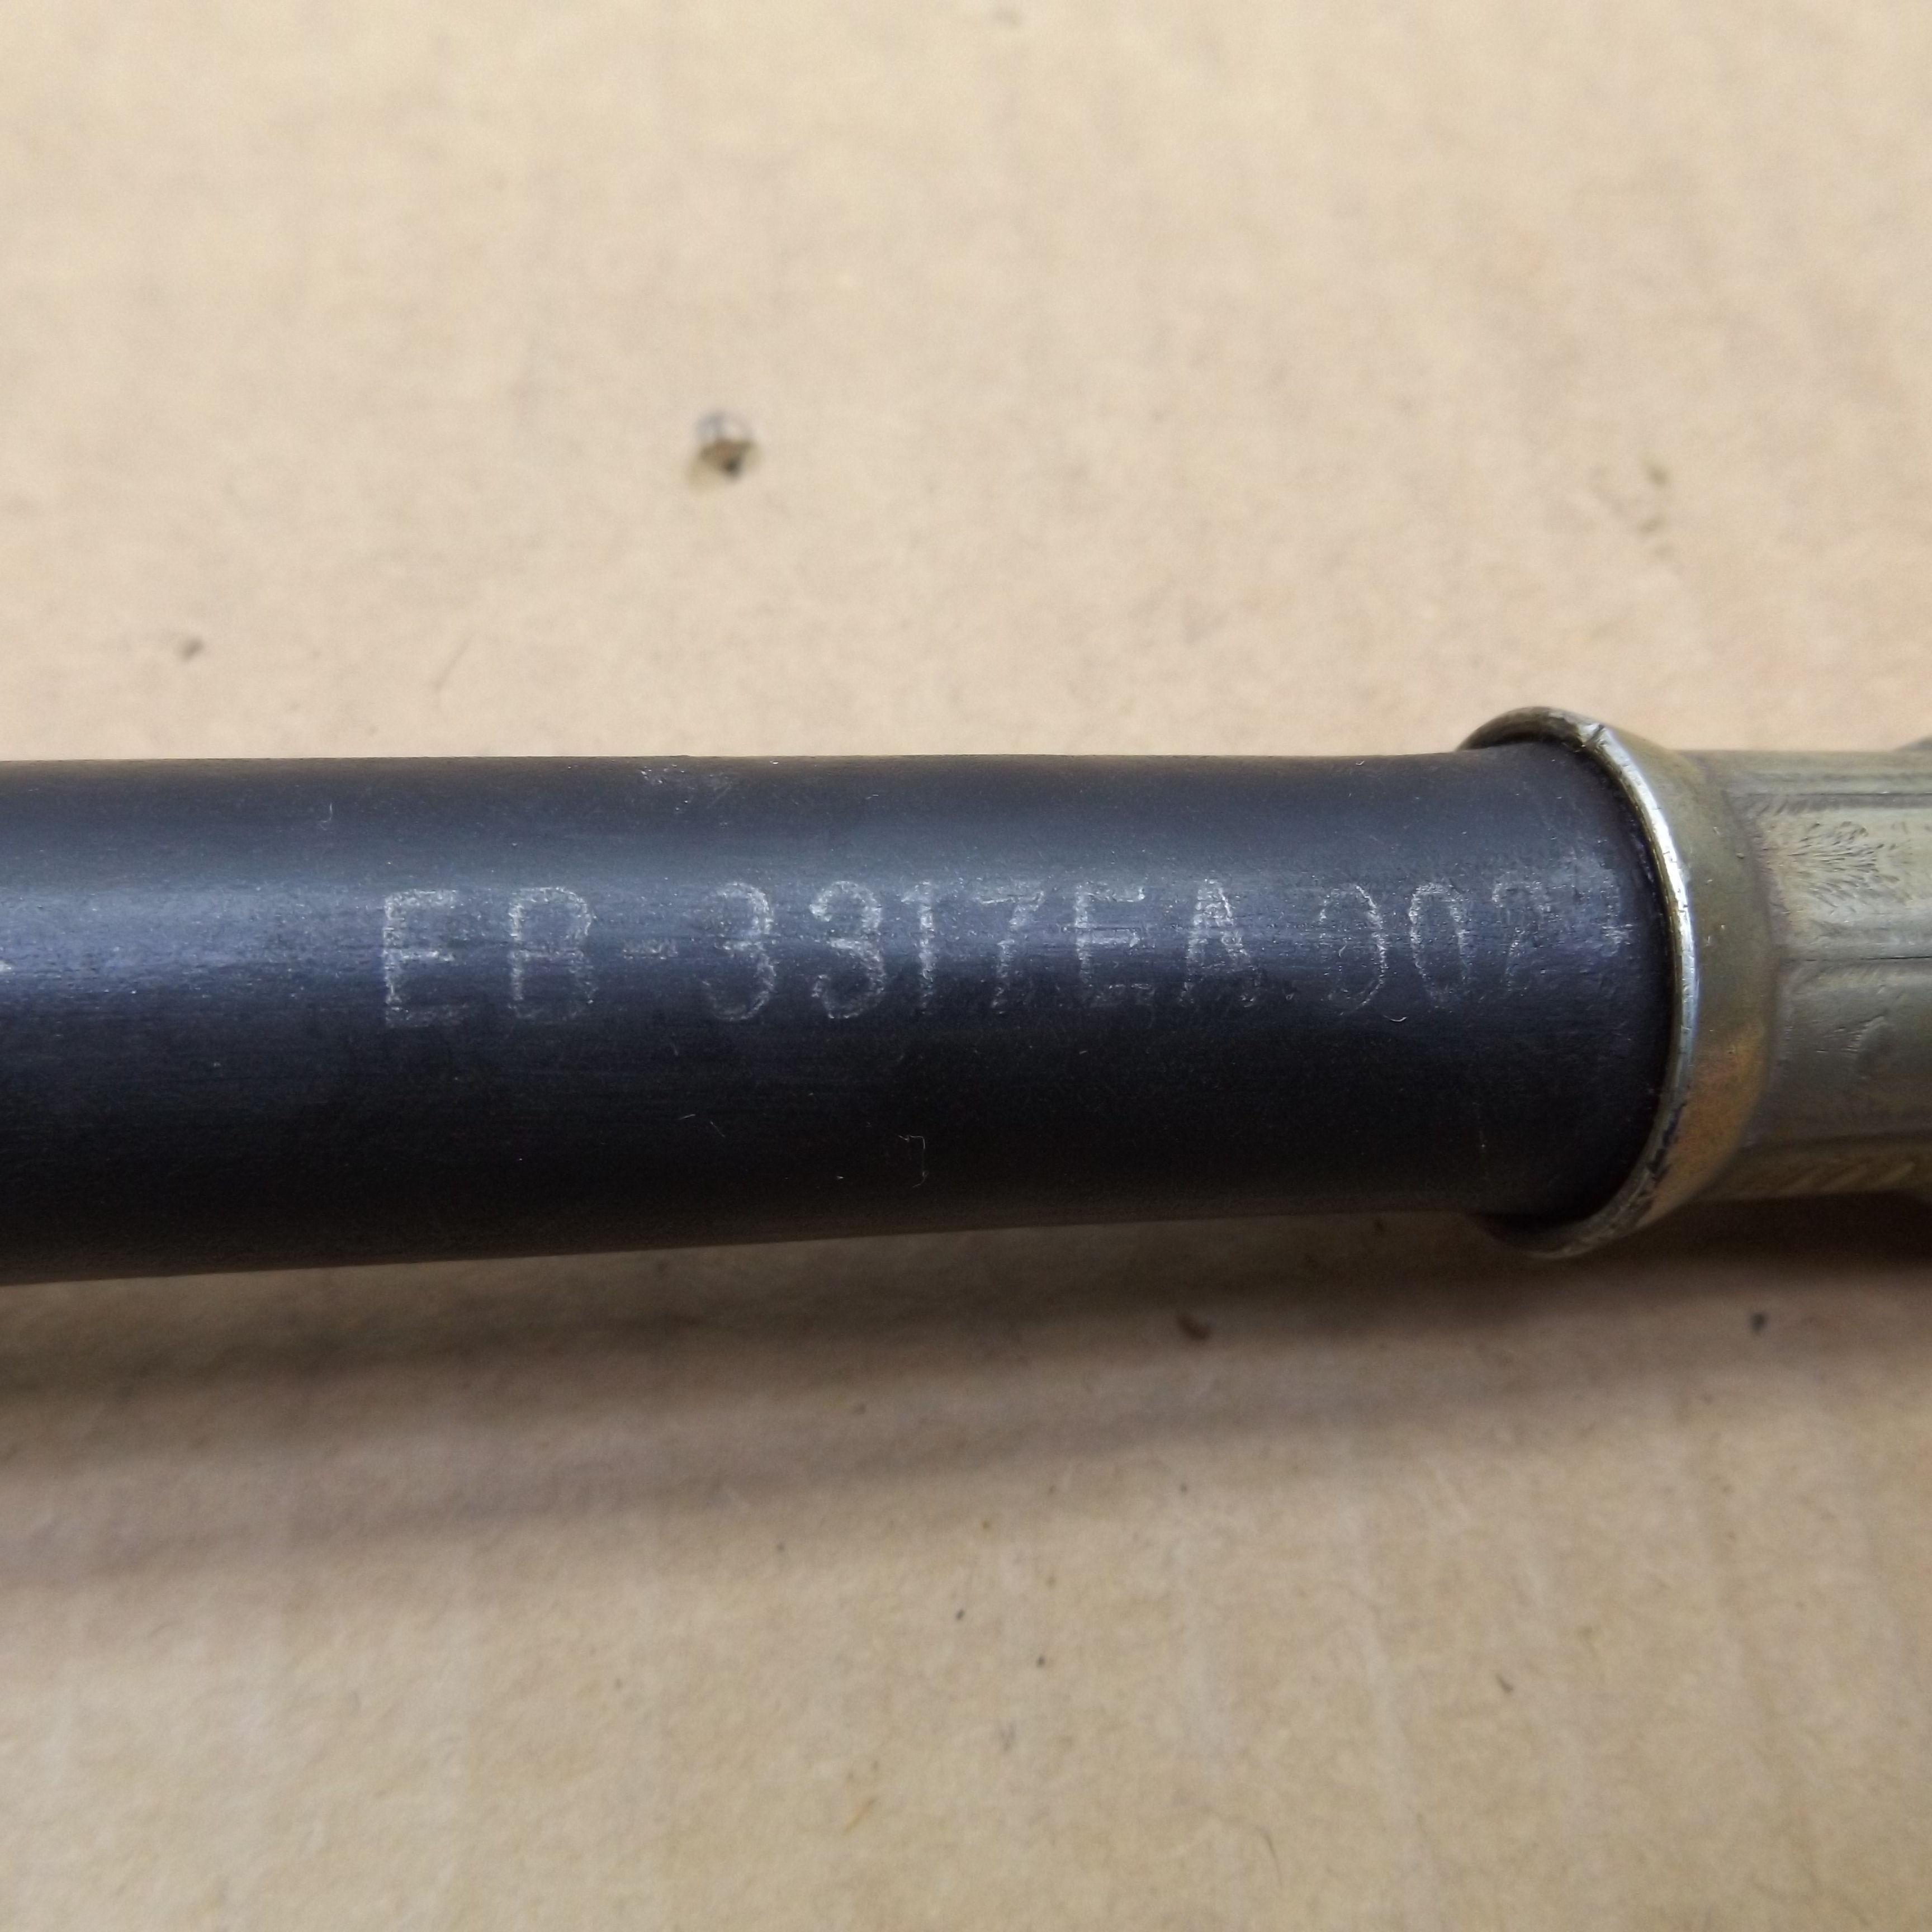 correct hose stamping "E B 3317EA 002 - 4 -"